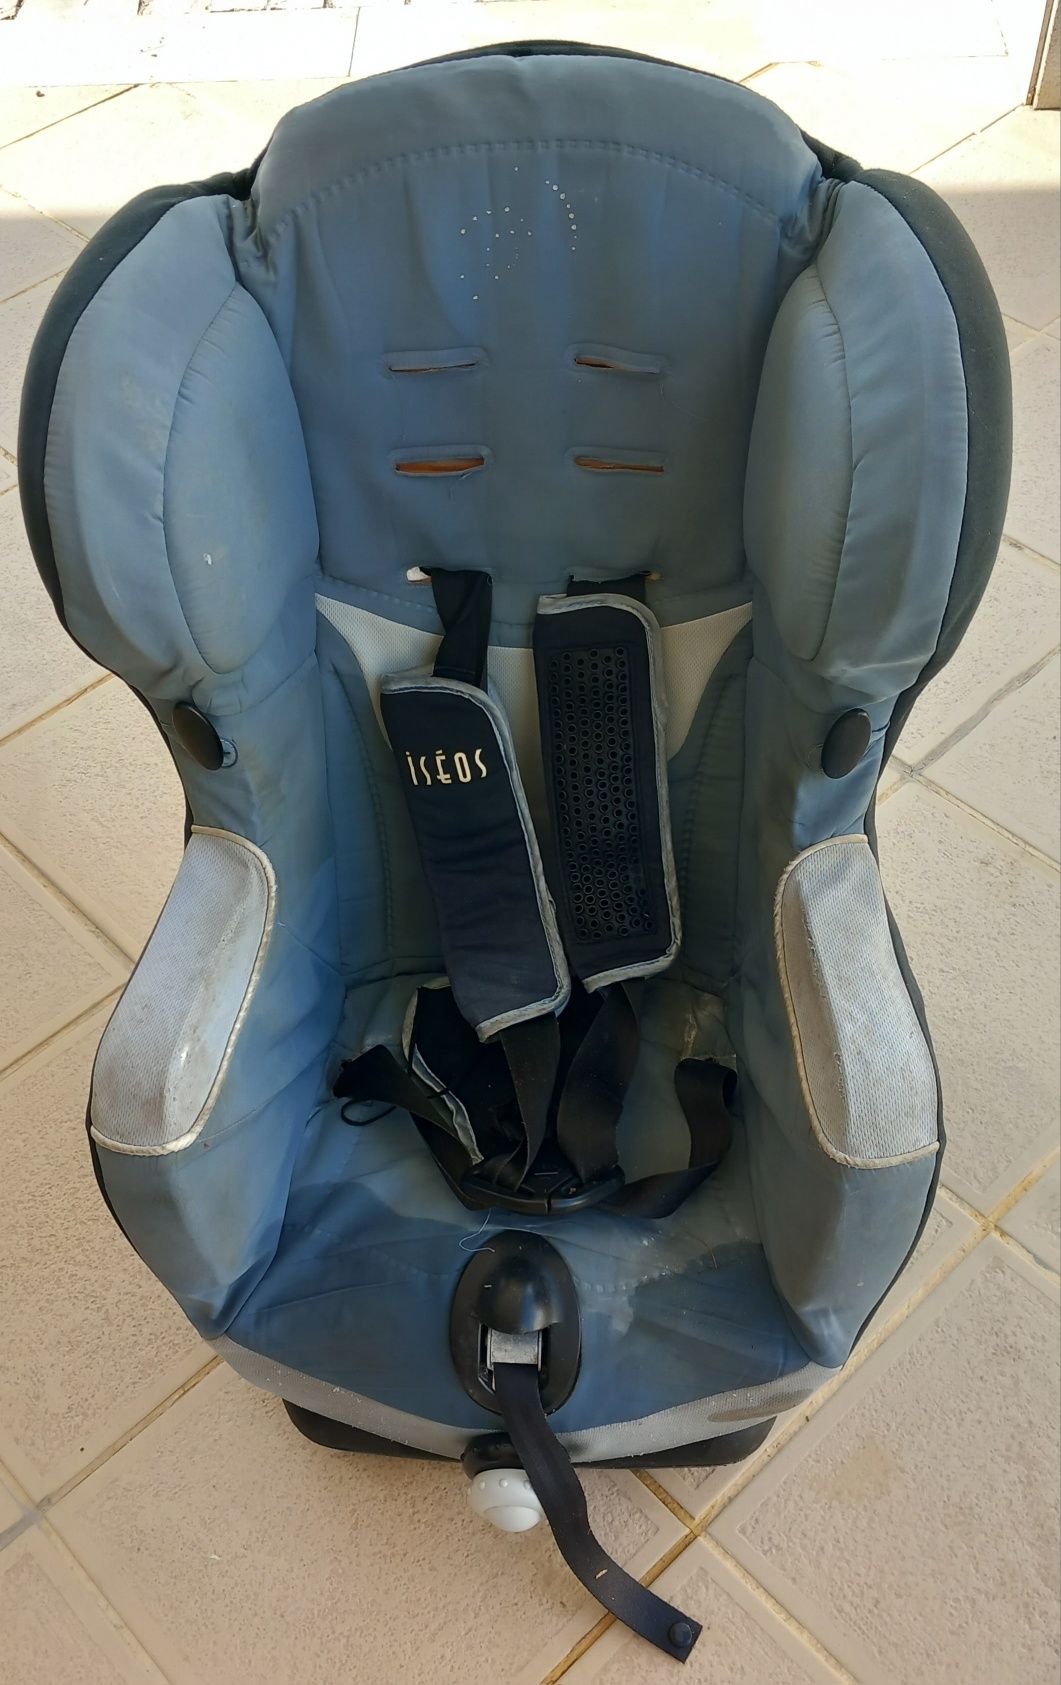 Cadeira auto 0-18kgs Iseos